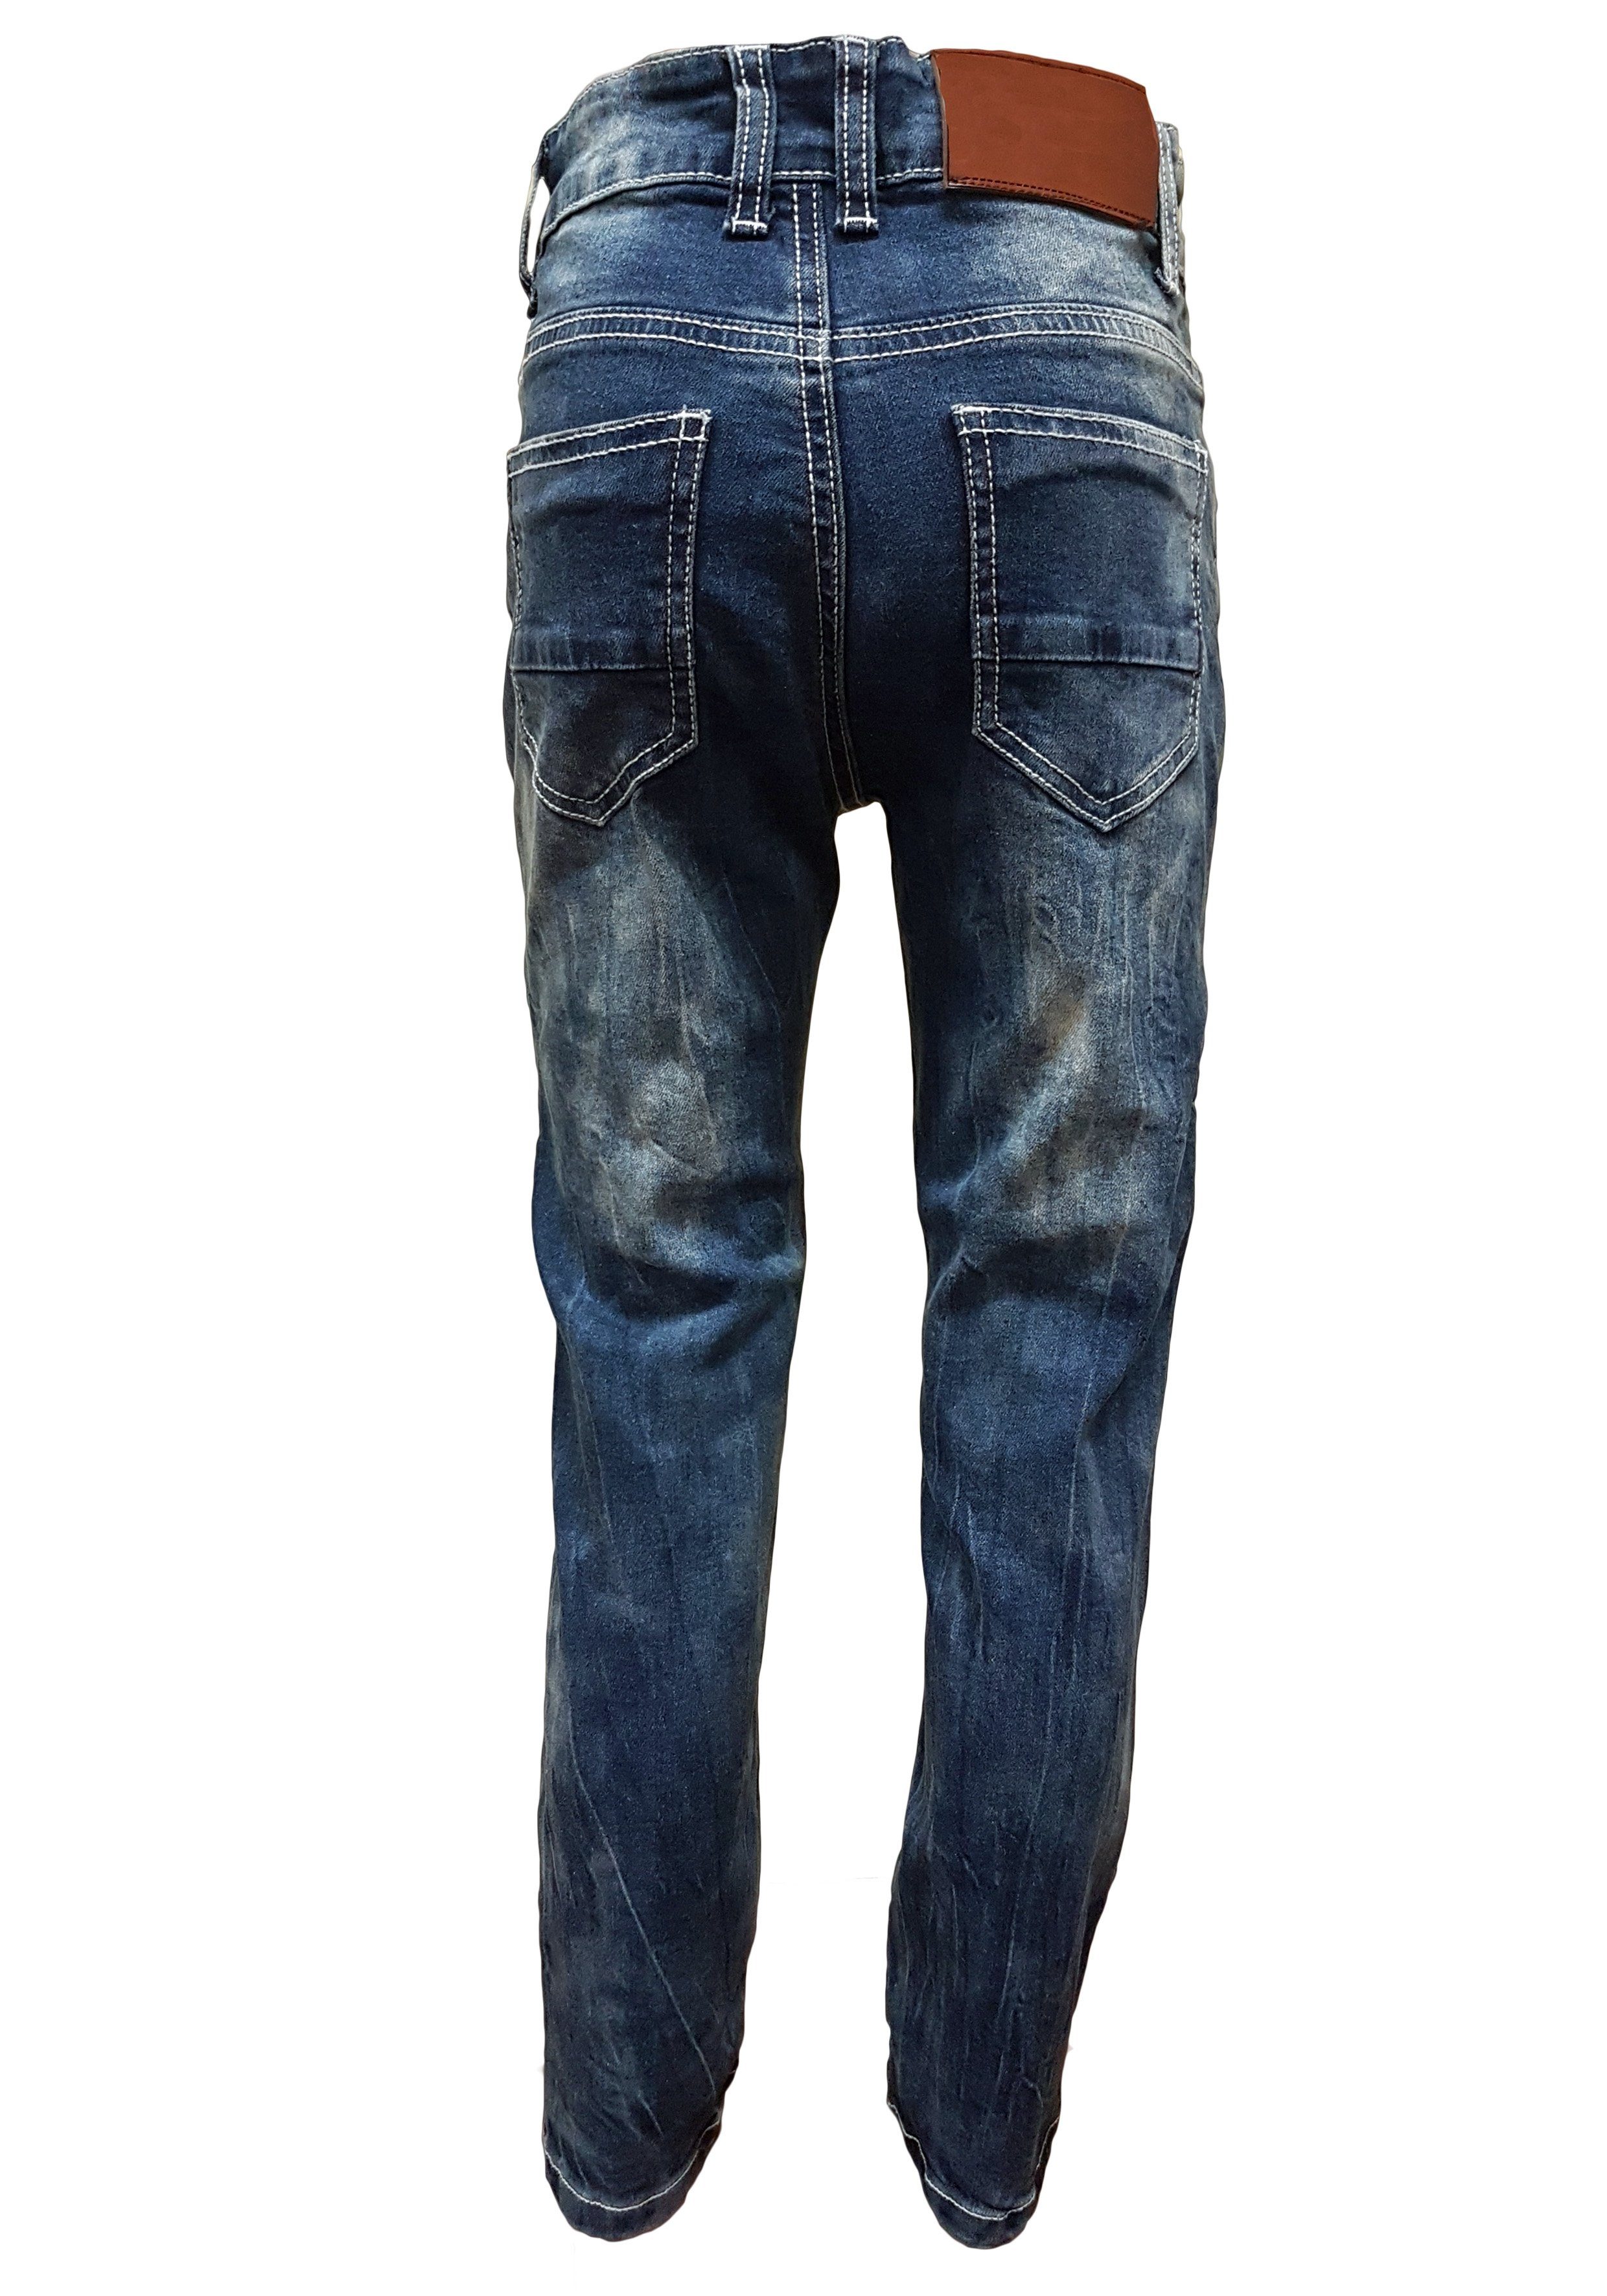 Family Trends Slim-fit-Jeans Biker-Design im angesagten